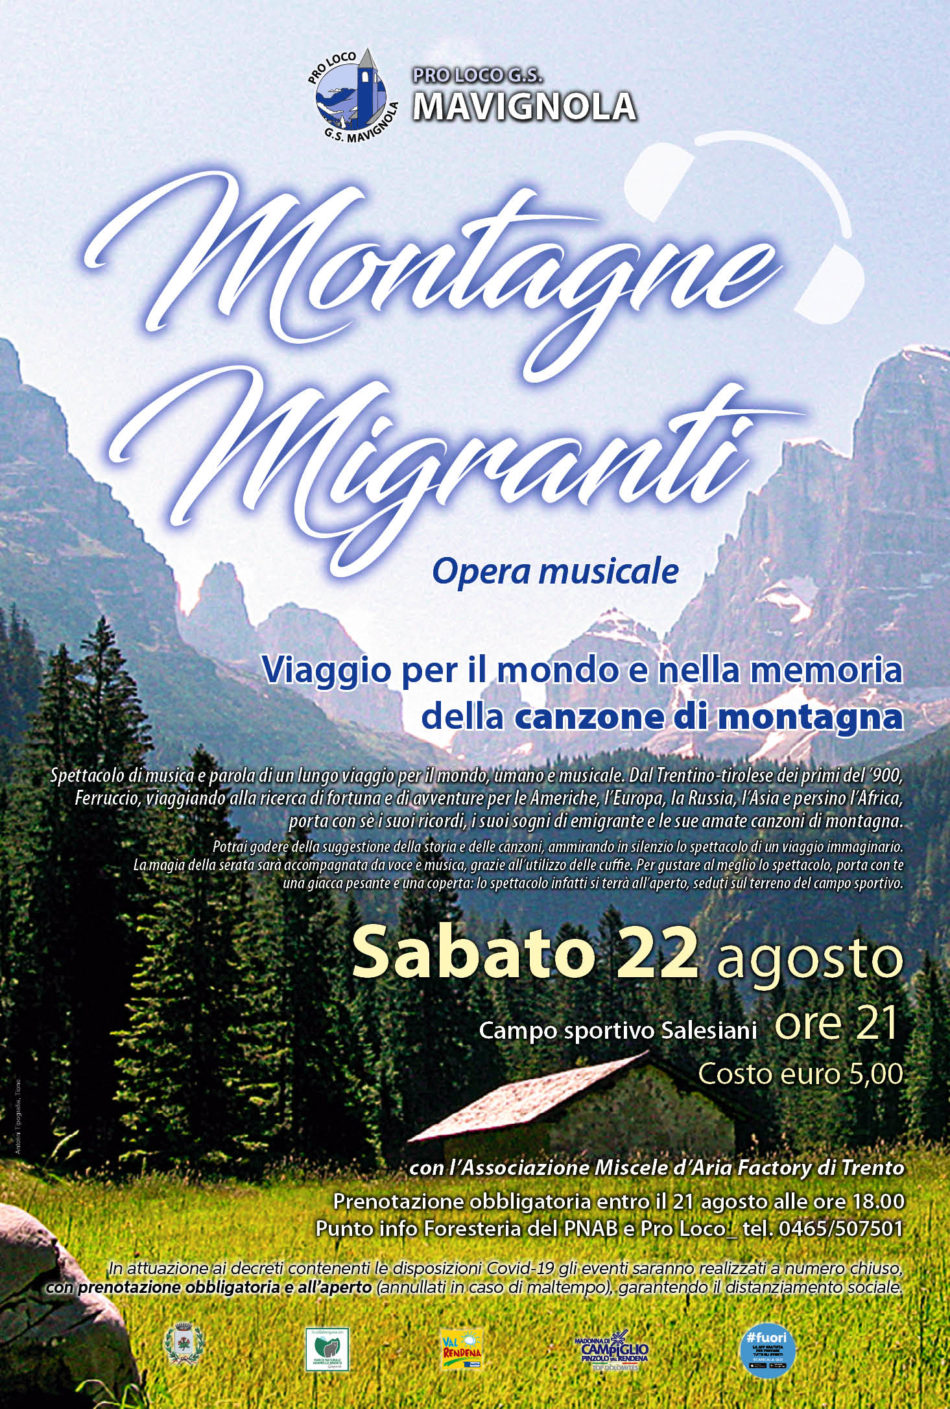 Mavignola, 22 agosto: Montagne Migranti